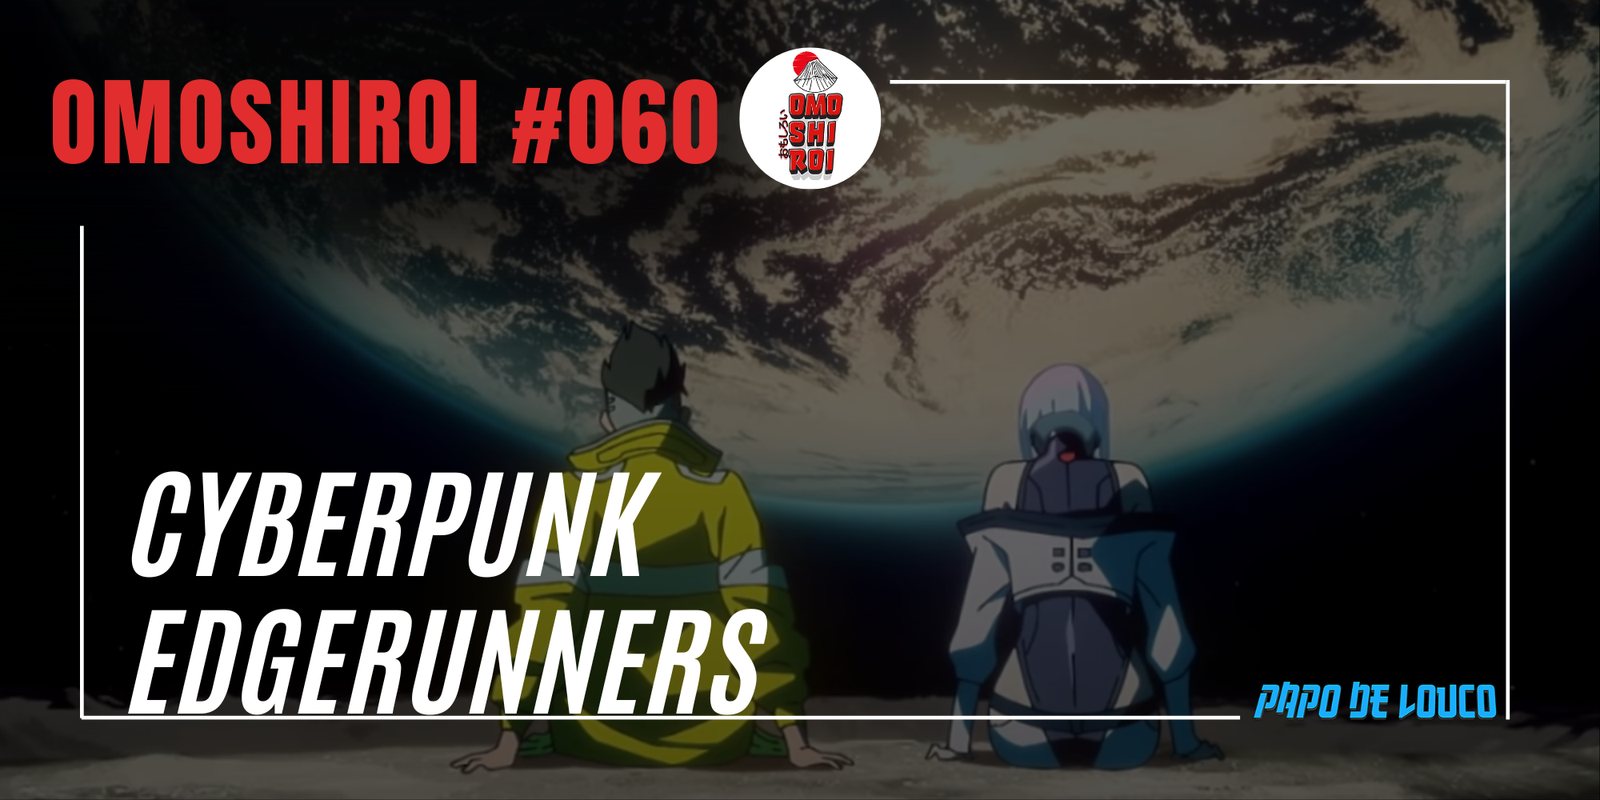 Omoshiroi #060 – Cyberpunk Edgerunners - Papo de Louco